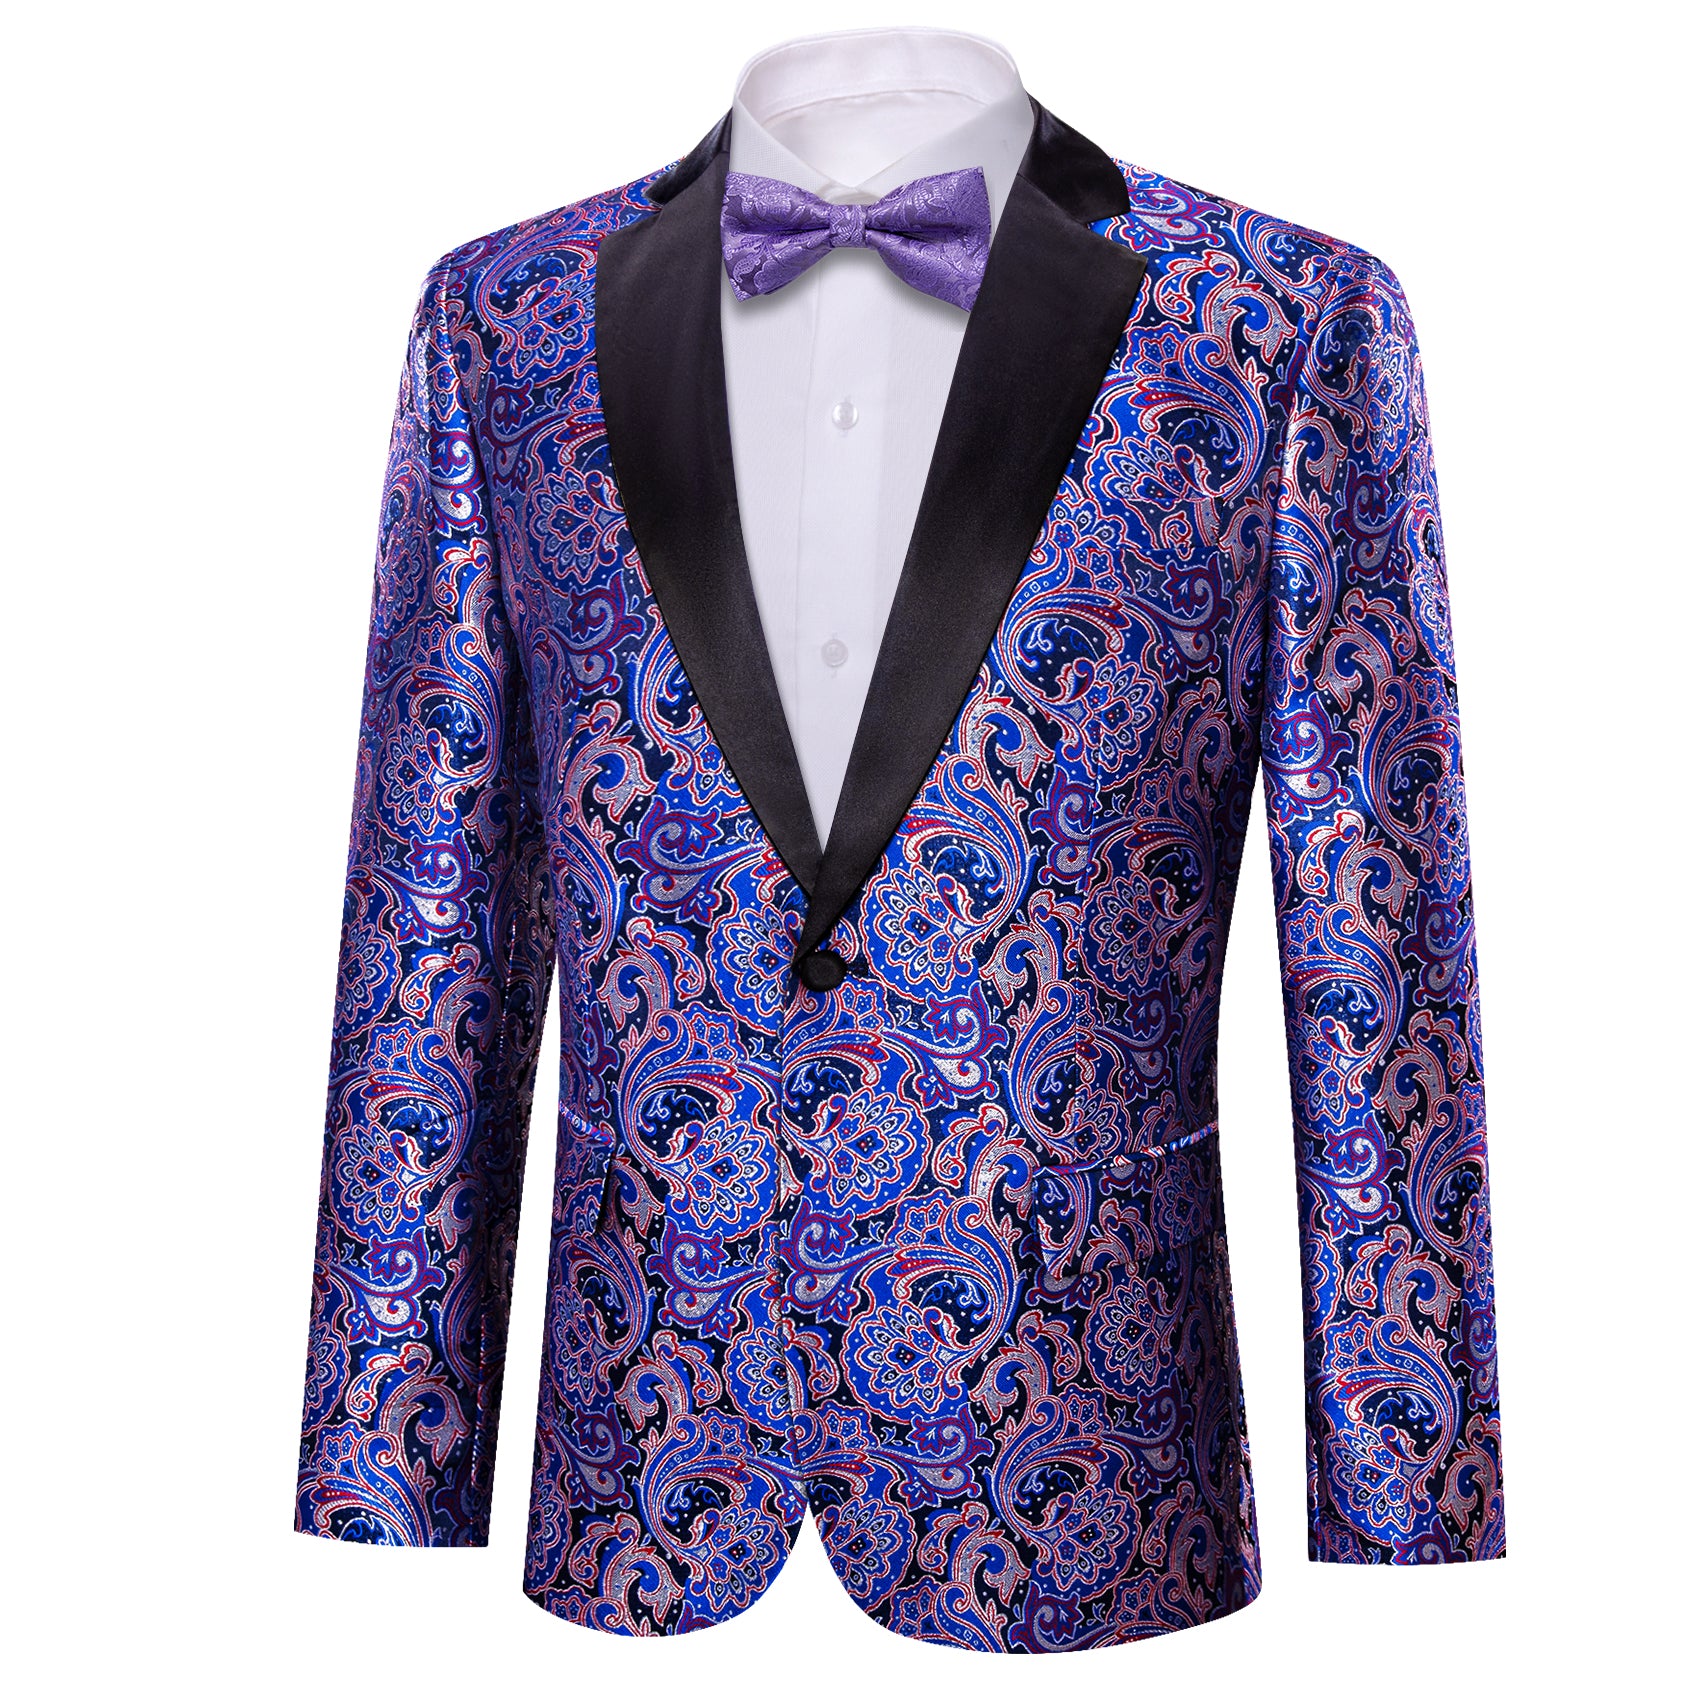 Men's Dress Party Hyacinth Floral Suit Jacket Slim One Button Stylish Blazer